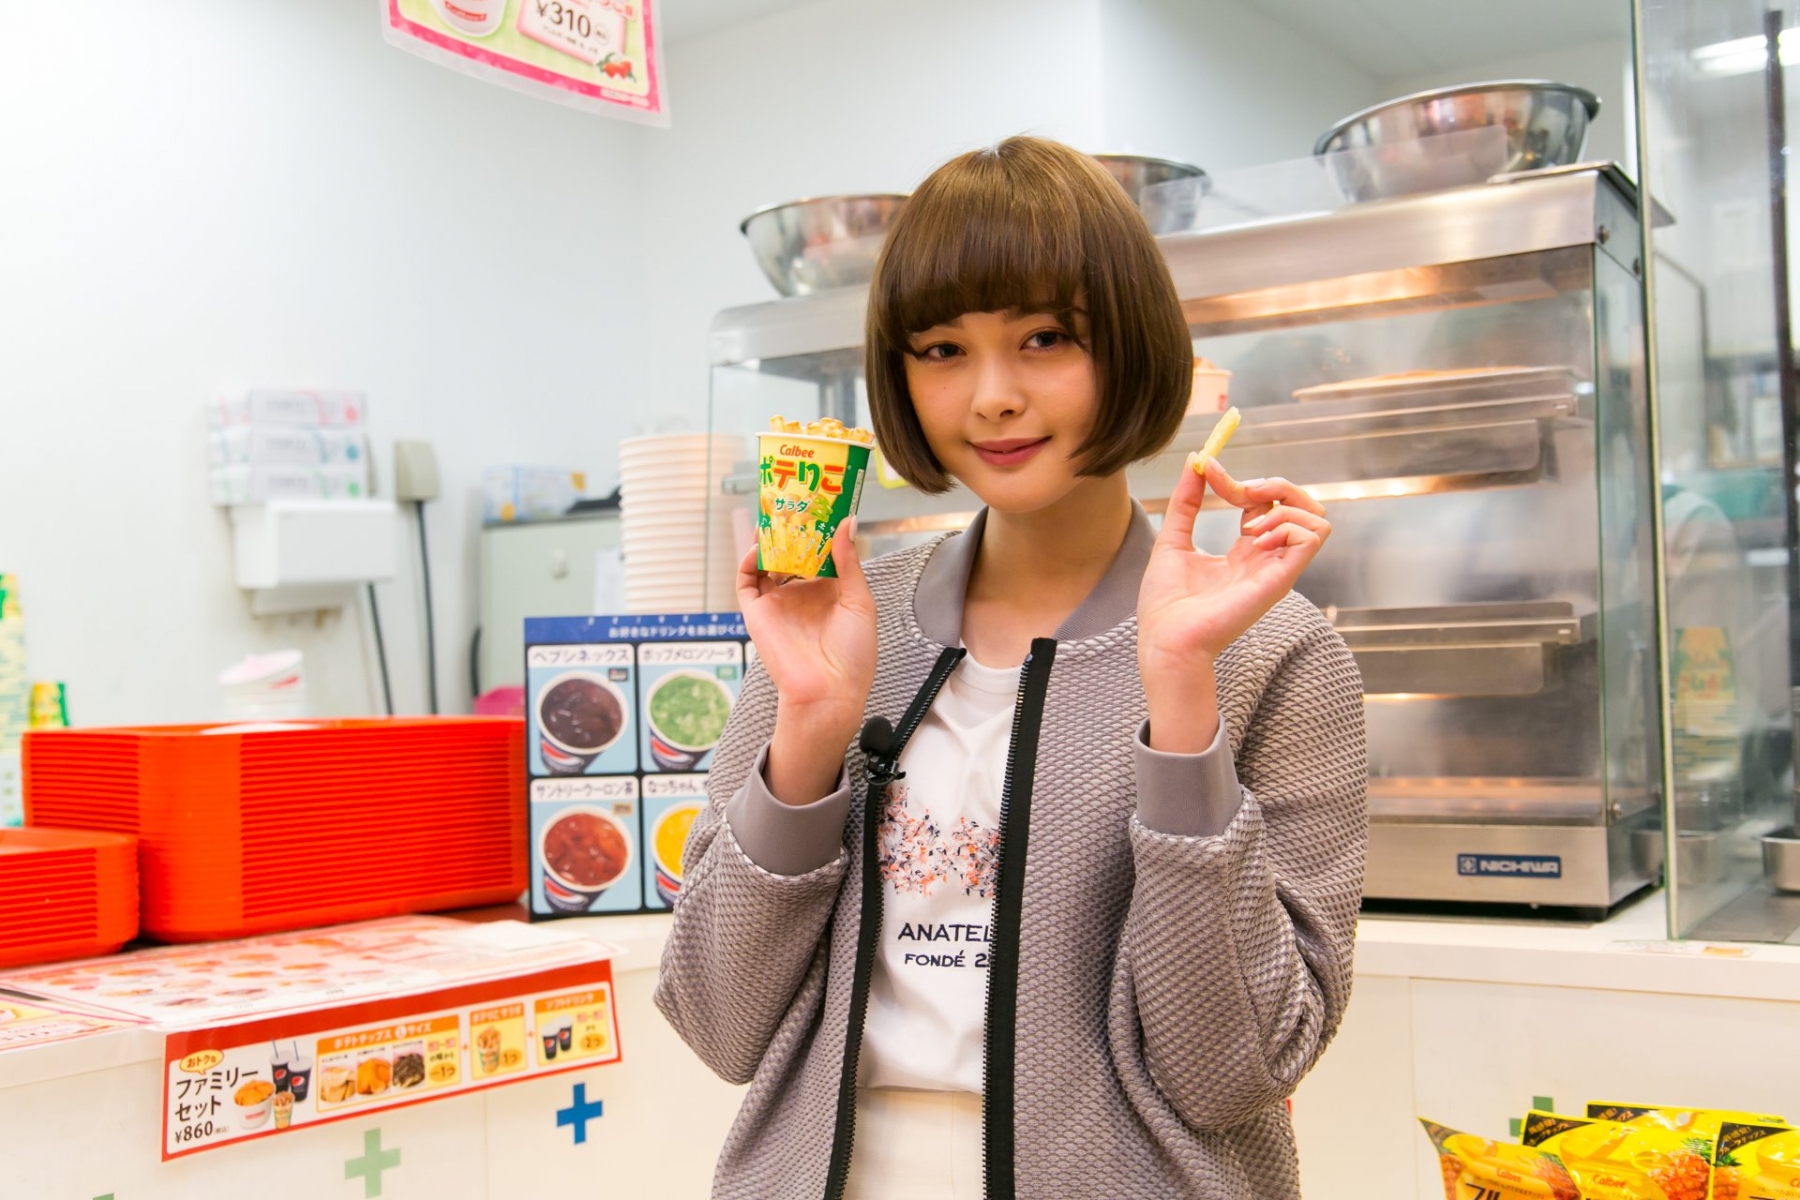 A Hit Among Teens!  Calbee Plus on Takeshita Street, Where You Can Enjoy Freshly Fried Potato Chips and Jagarico